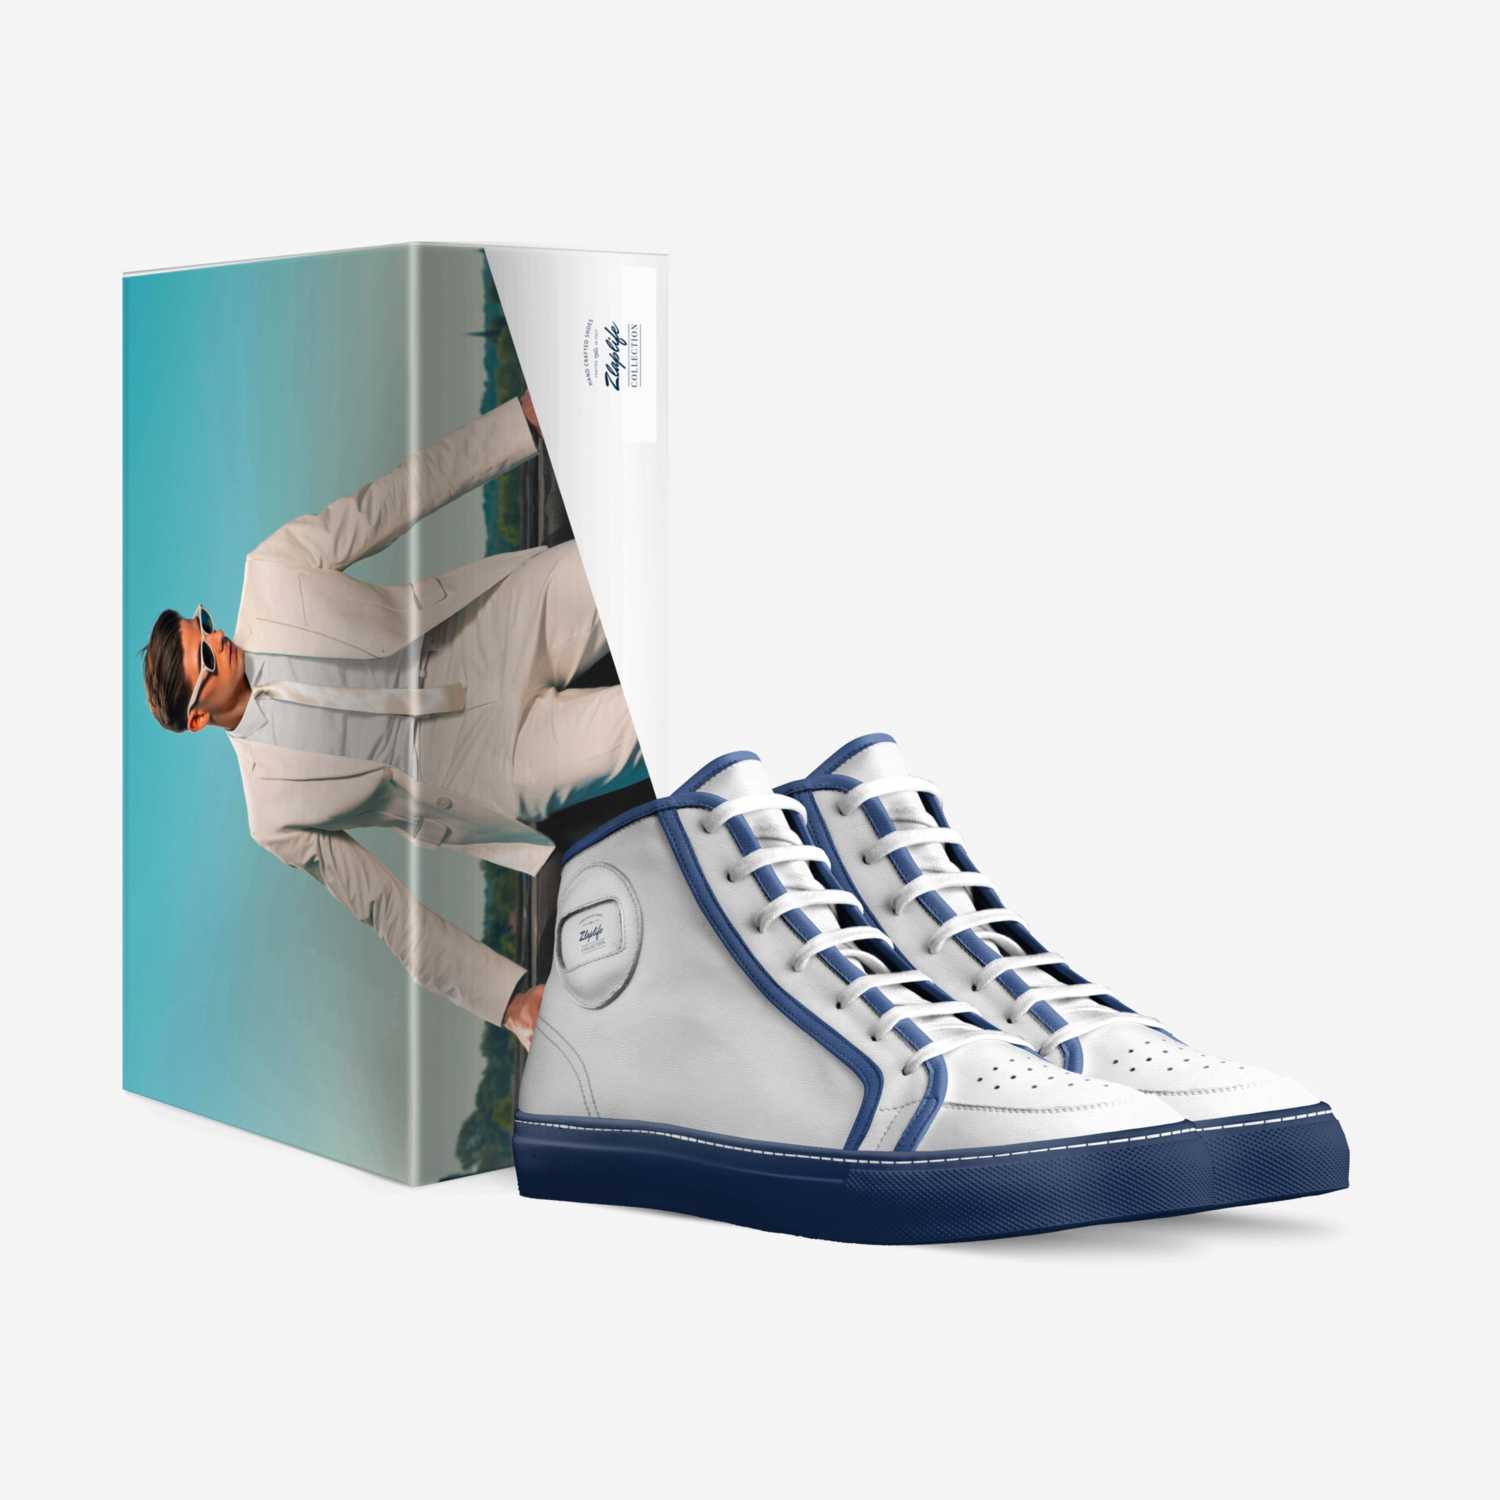 Zlaplife custom made in Italy shoes by Dakid Zlaplife | Box view